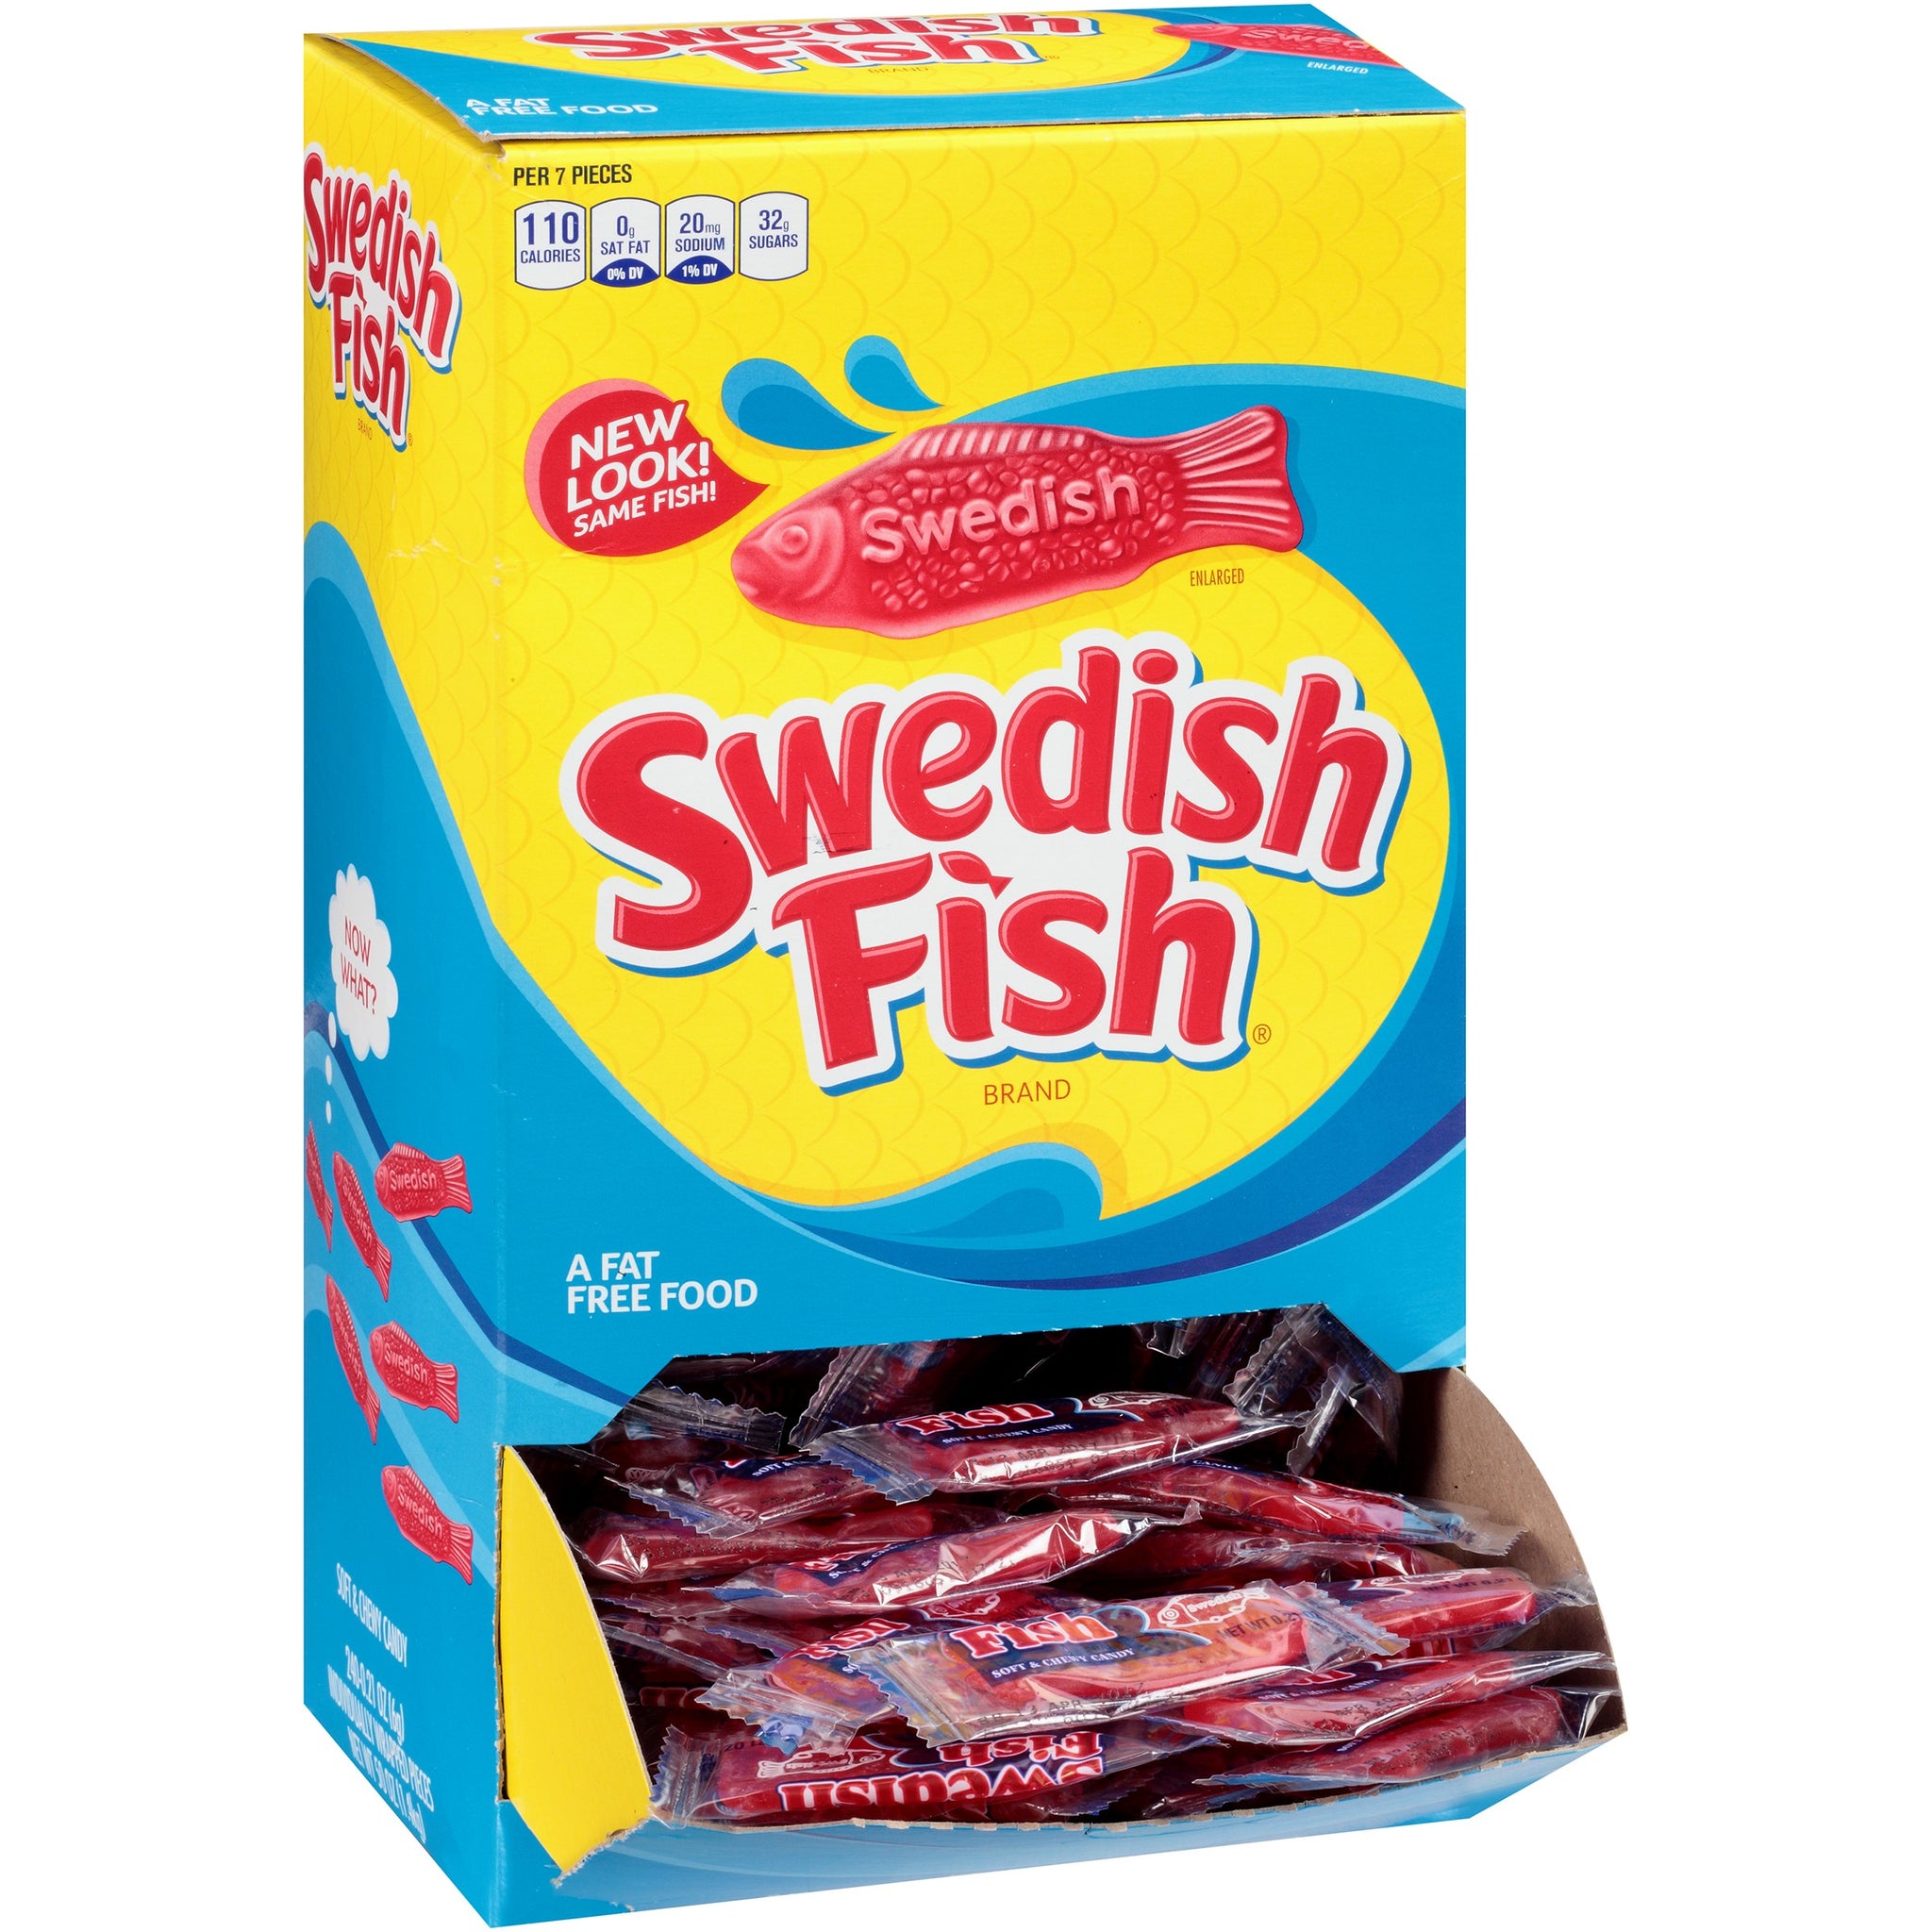 Swedish Fish Soft & Chewy Candy (Original, 3.5-Pound Bulk Bag)